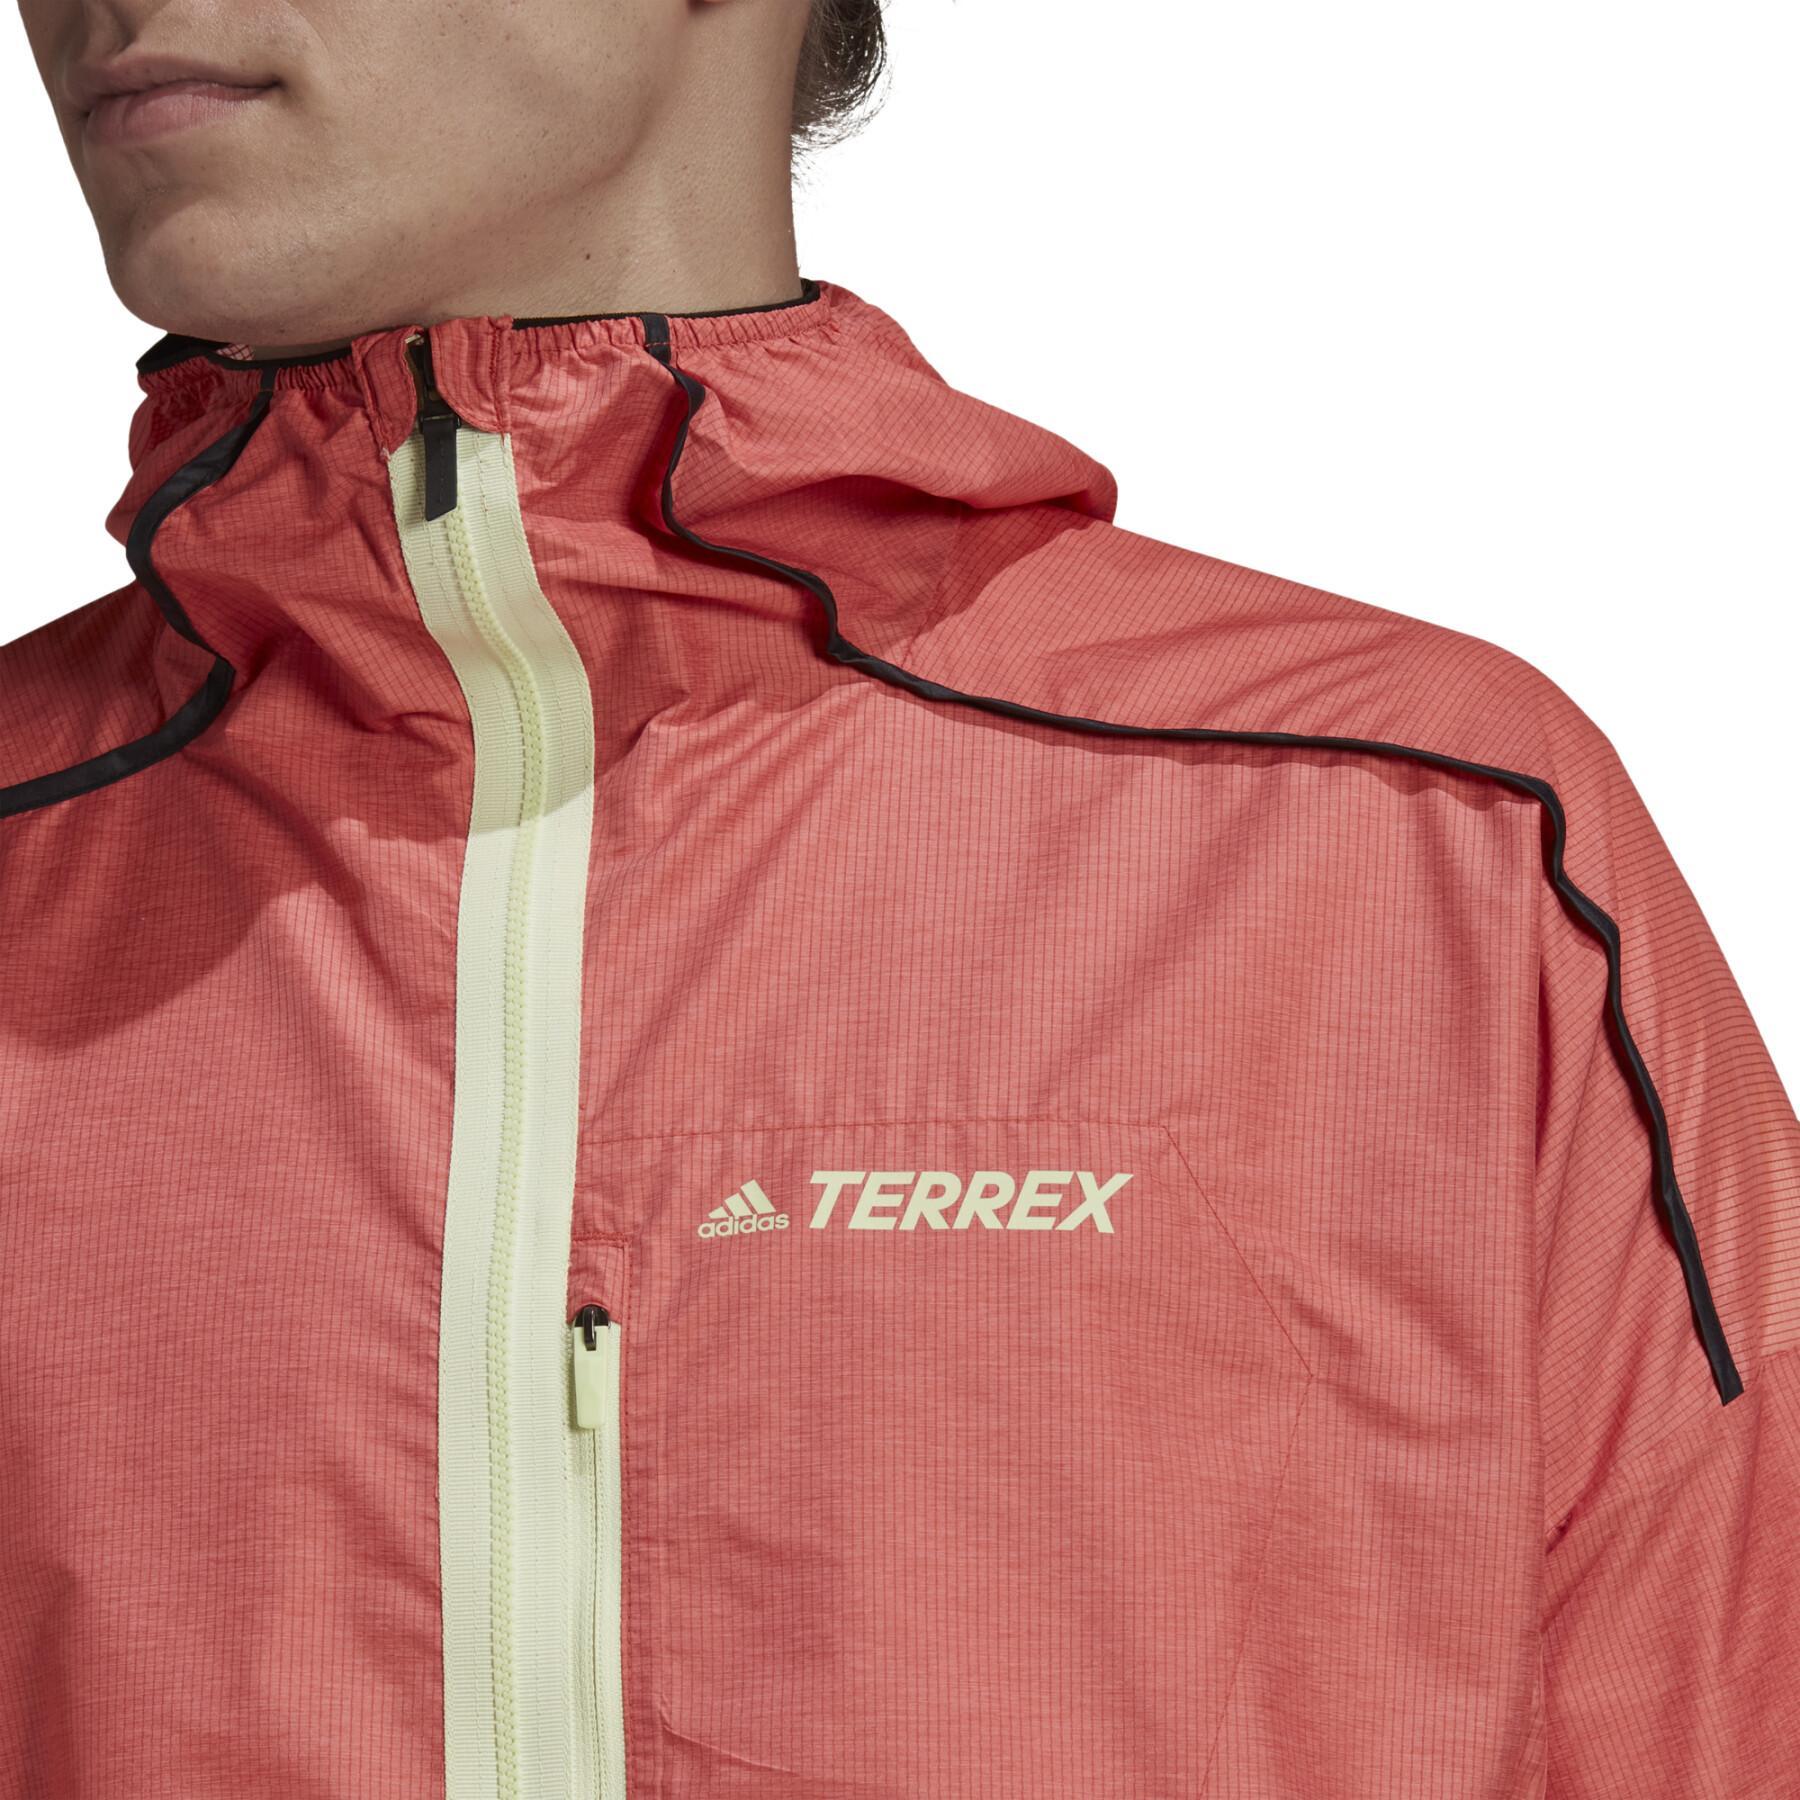 Windproof jacket adidas Terrex Agravic Windweave